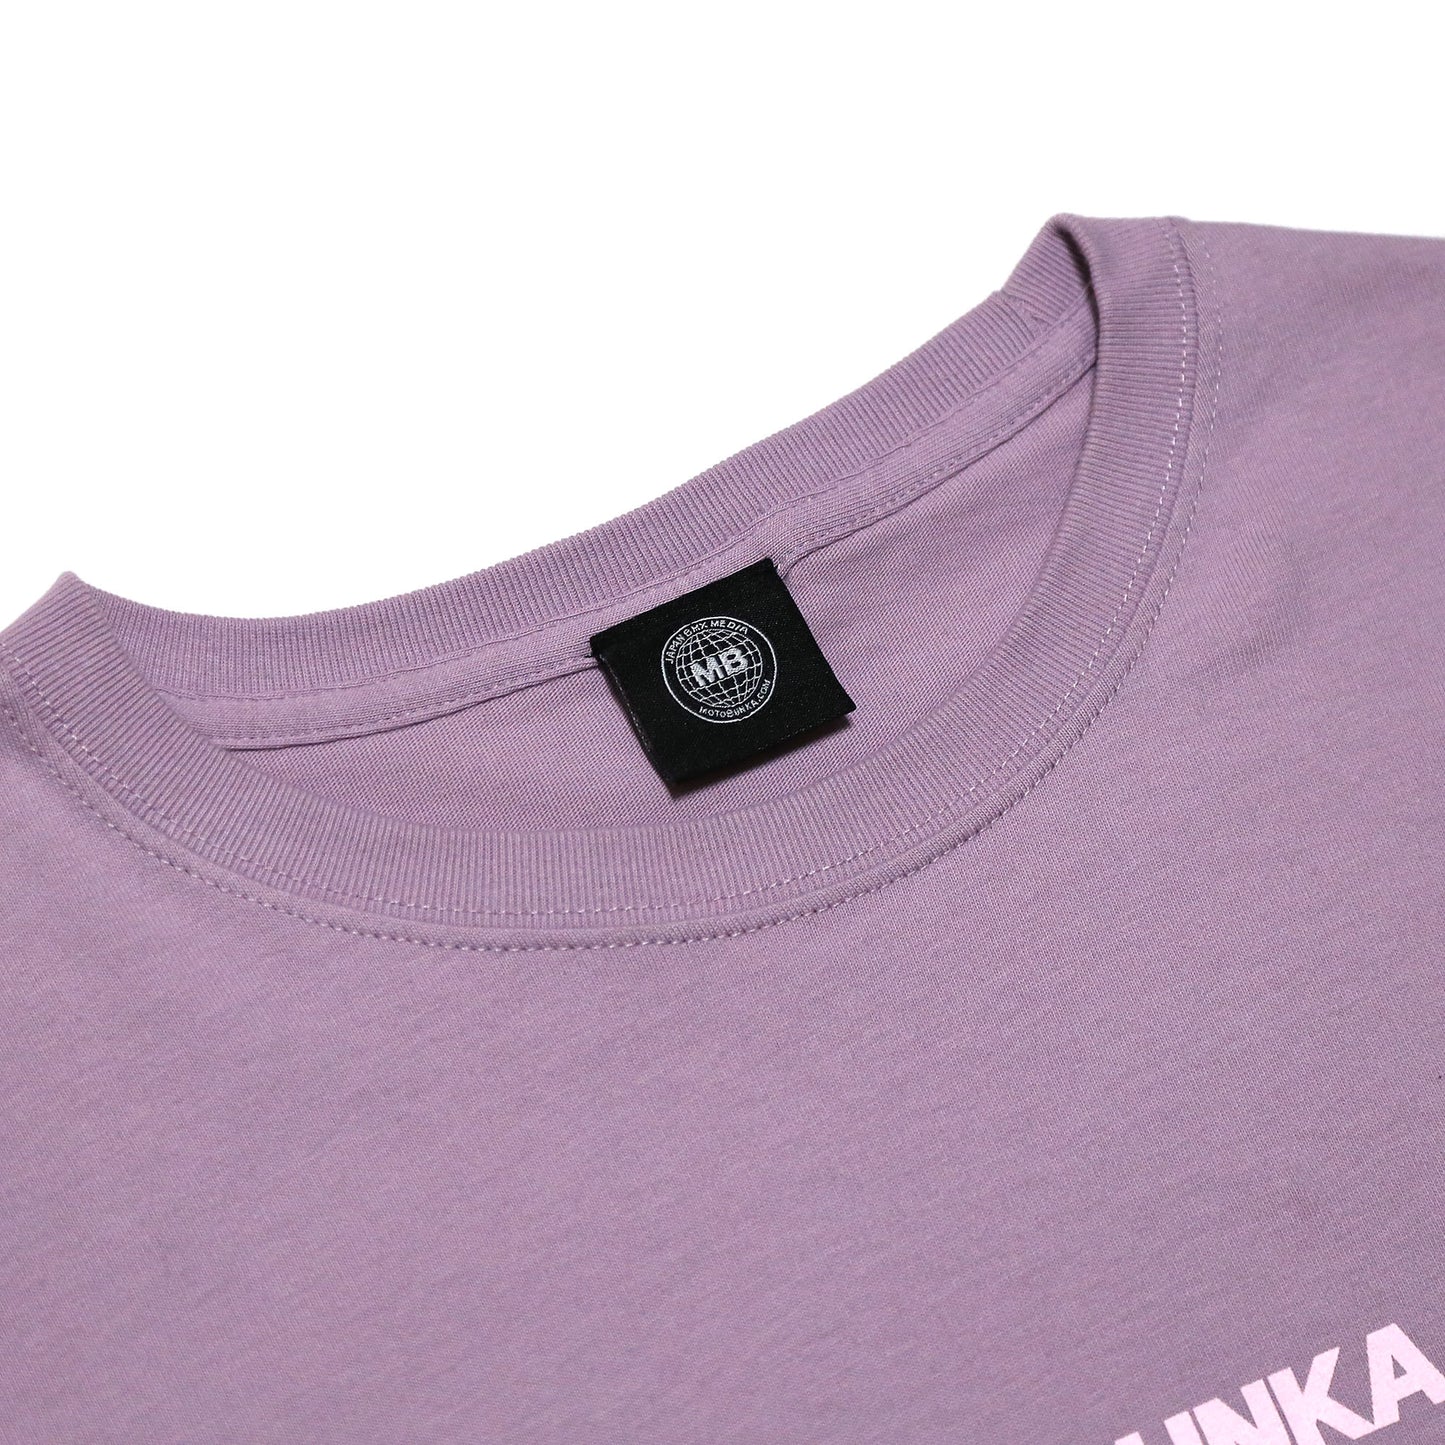 MOTO-BUNKA - JBM 24 T-Shirt/Misty Purple